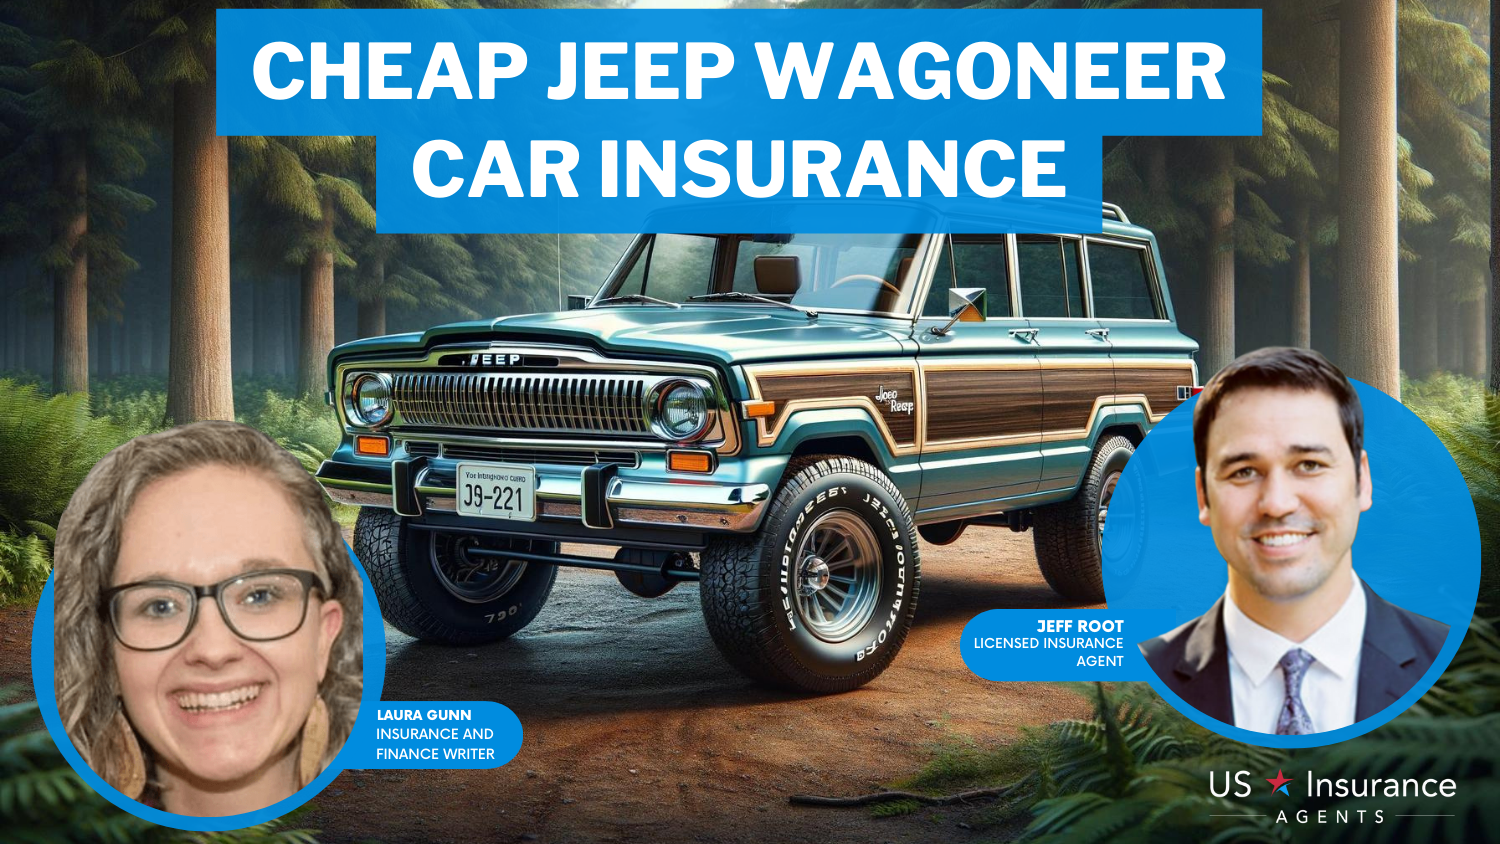 Cheap Jeep Wagoneer Car Insurance: Erie, Chubb, and AAA